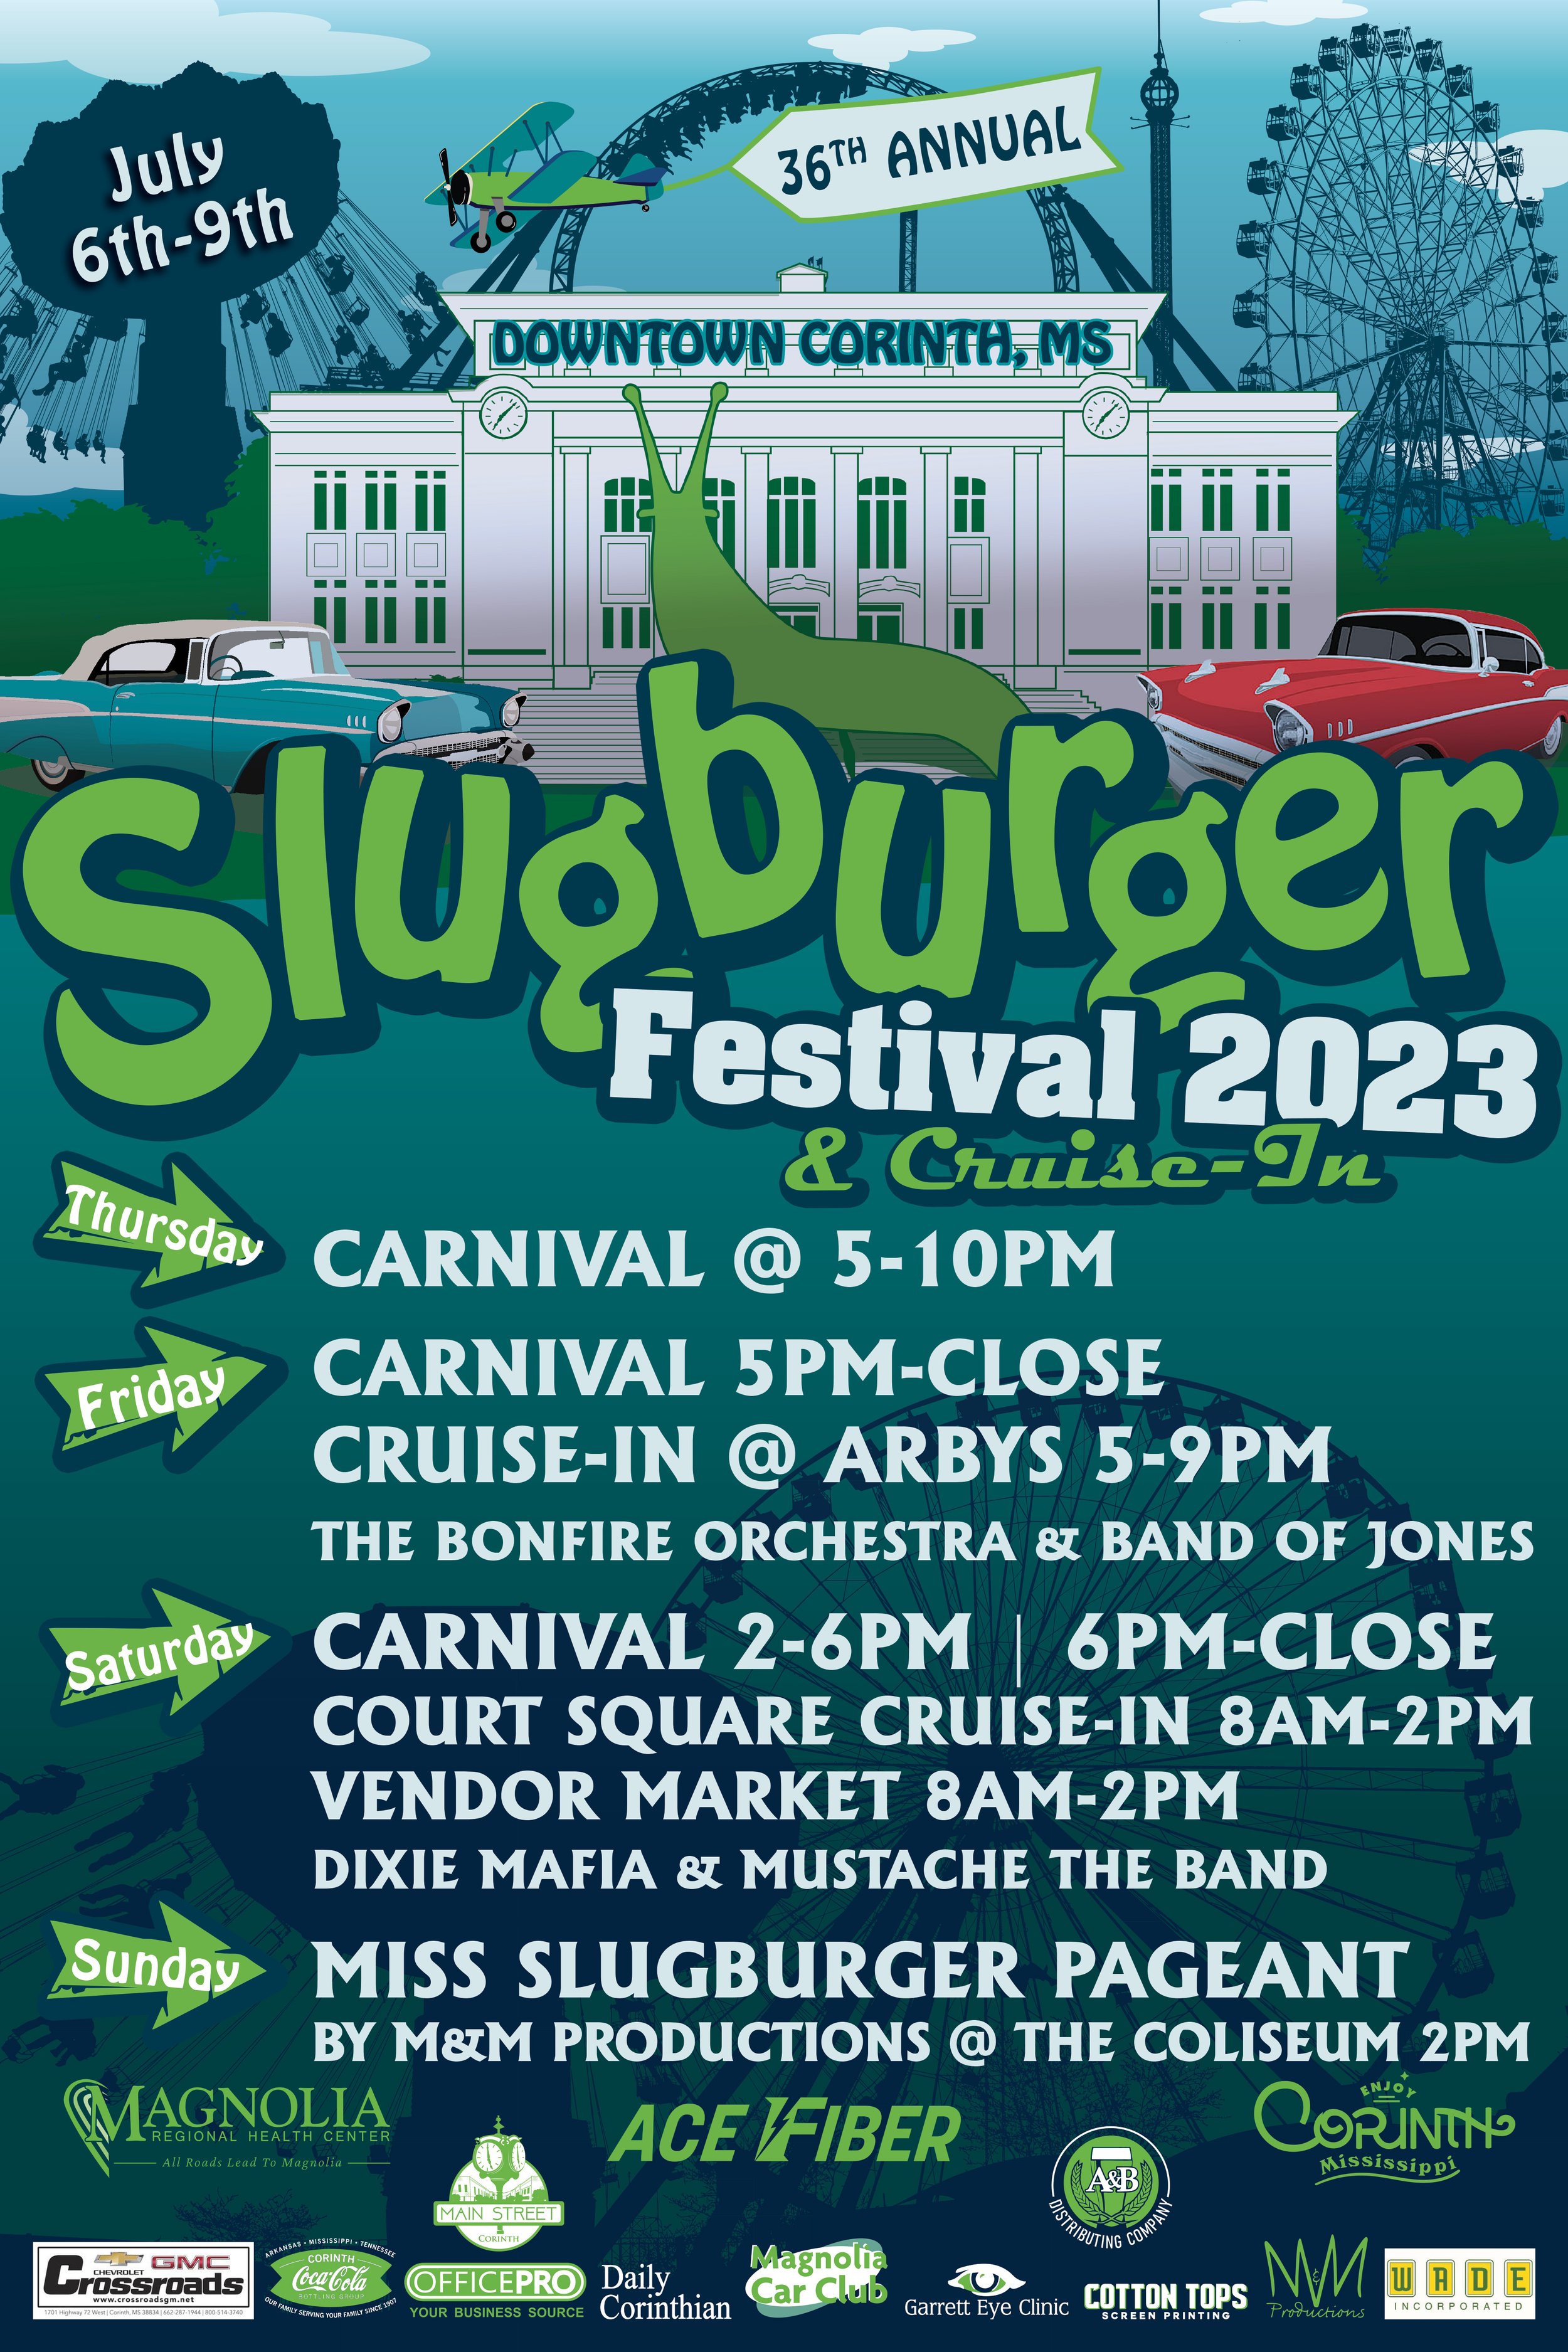 2023 Slugburger Festival Visit Corinth, MS